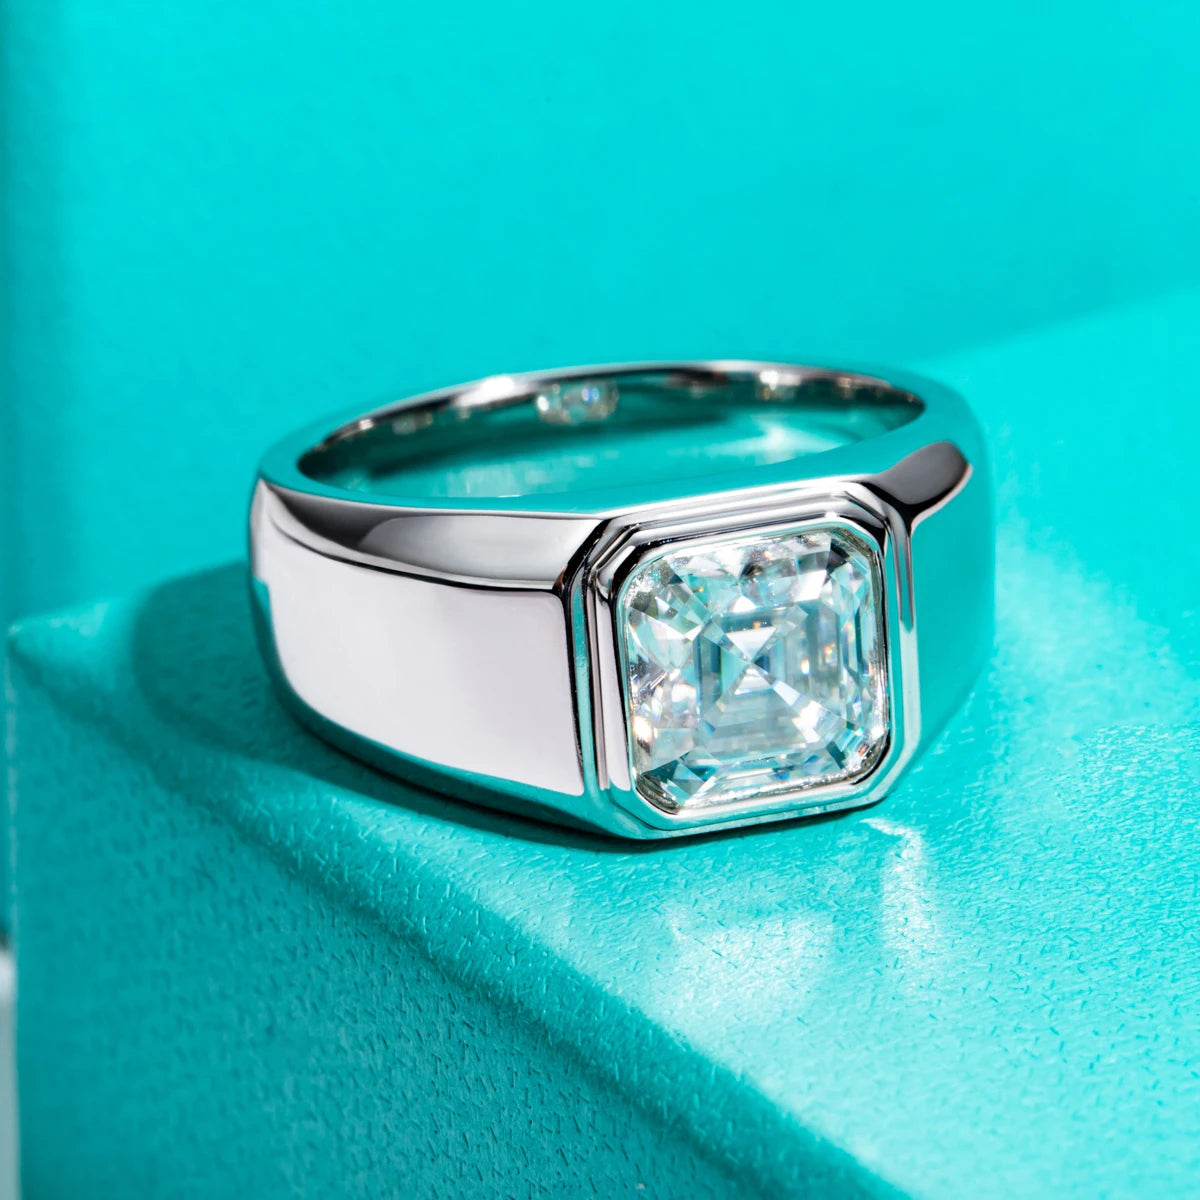 Moissanite Rings: Exquisite, Elegant Jewelry for Men